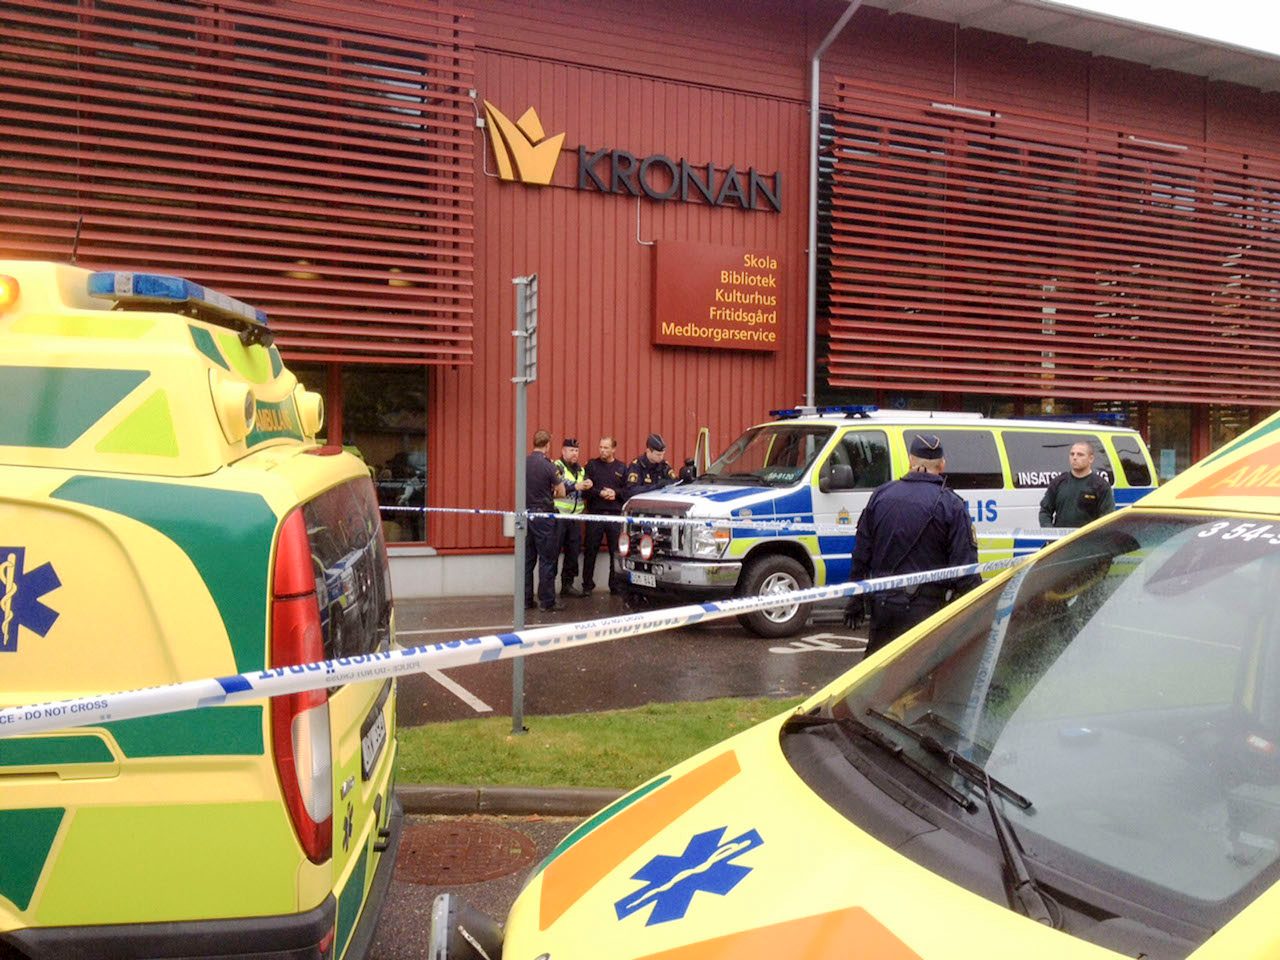 2 killed in sword attack on Sweden school